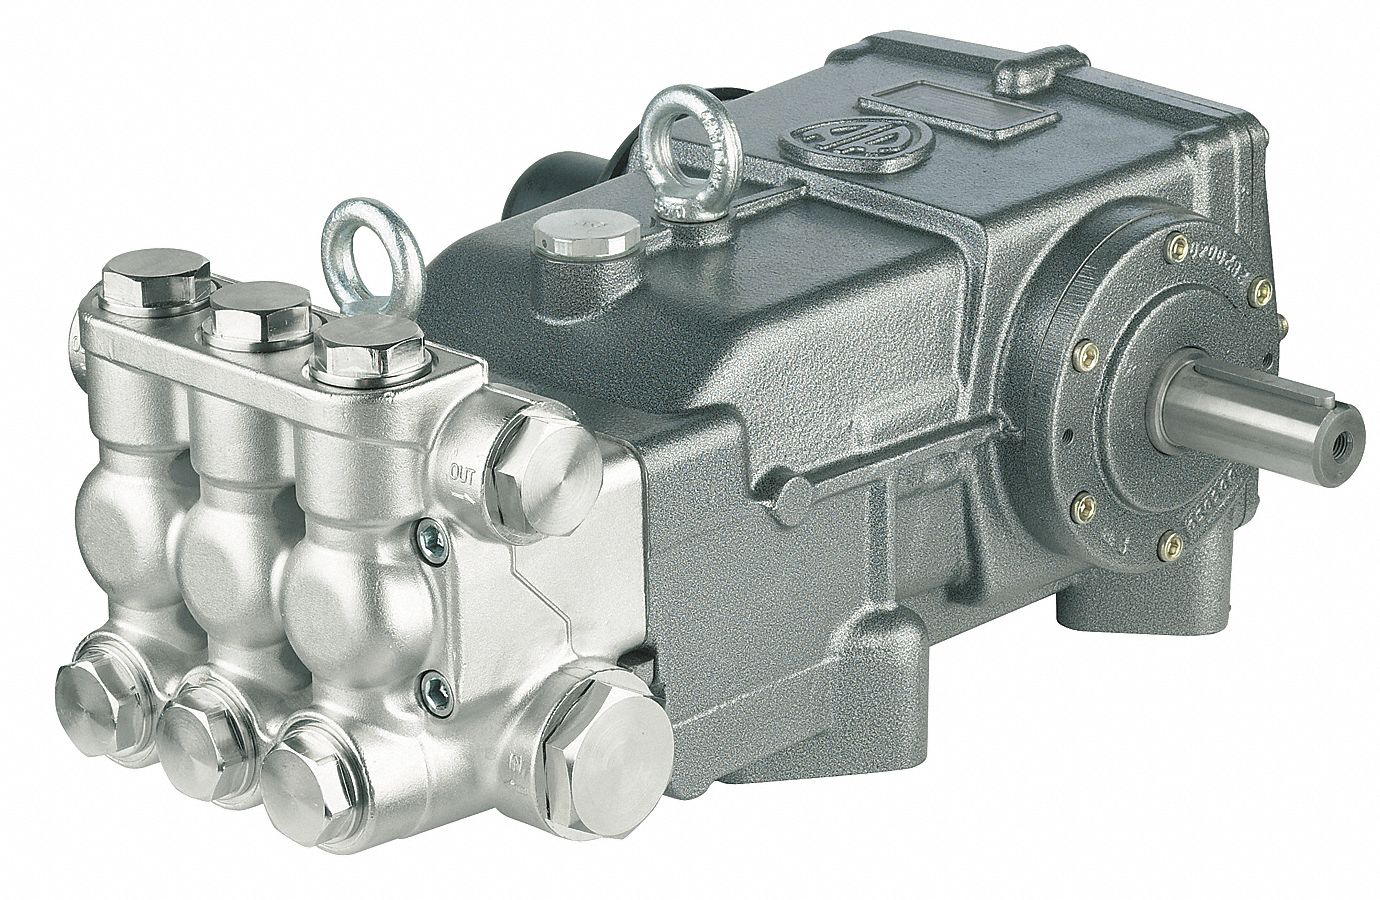 Pressure Plunger Pump: Belt-Drive, 18 gpm Flow Capacity (GPM), 1,000 RPM RPM